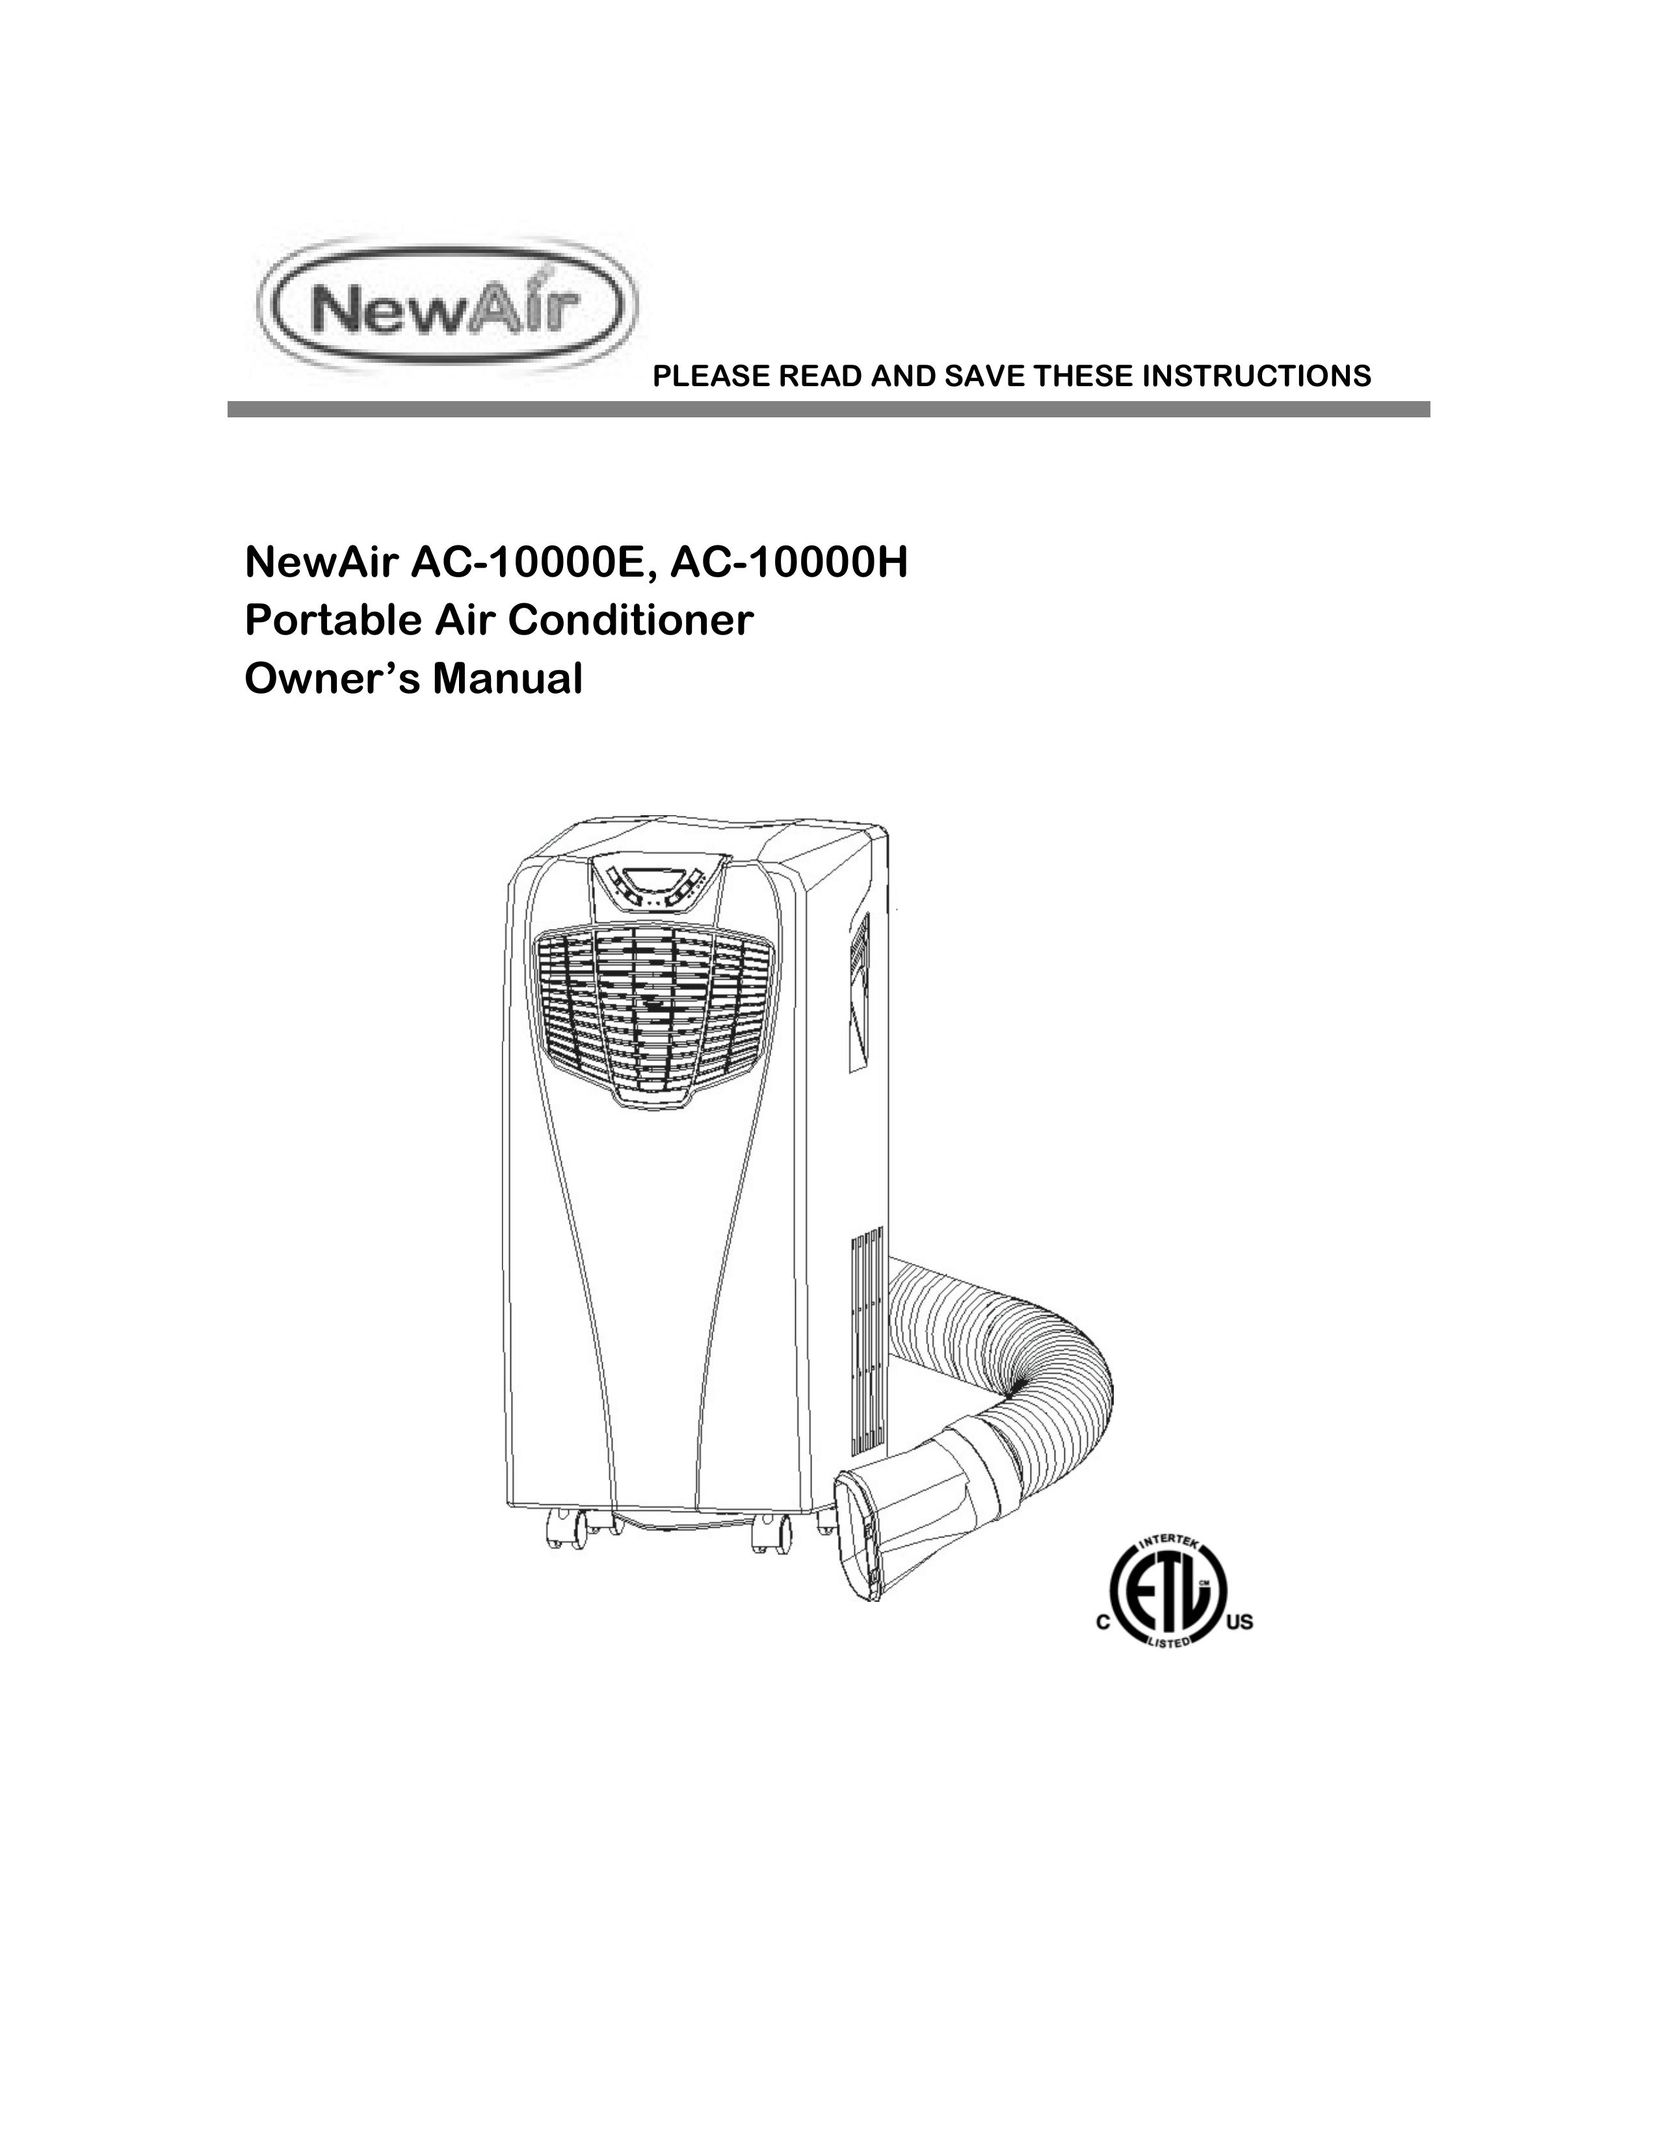 NewAir AC-10000H Air Conditioner User Manual